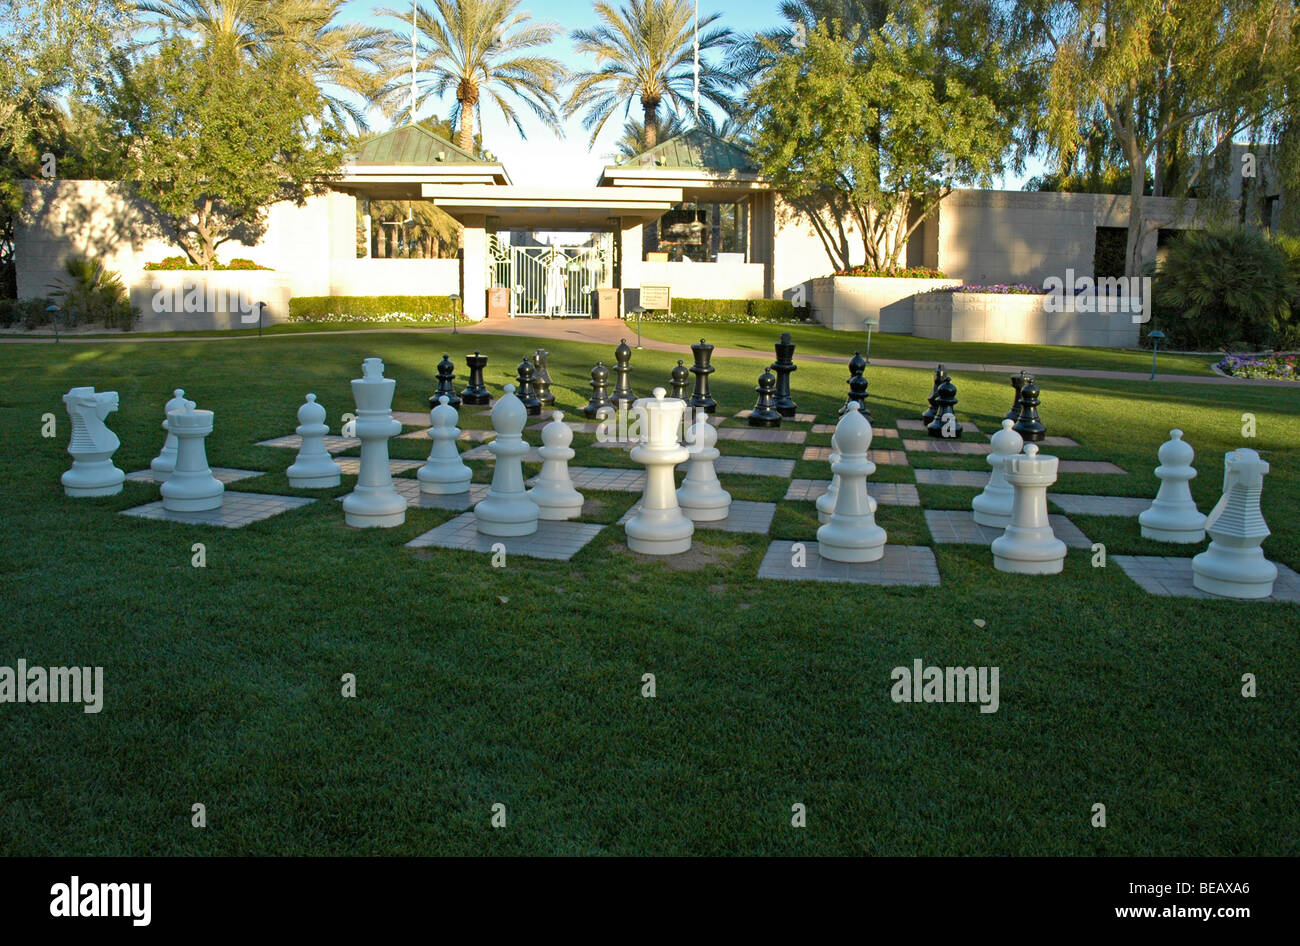 Oversize chess pieces on the lawn of the Arizona Biltmore Hotel in Phoenix, Arizona, USA Stock Photo